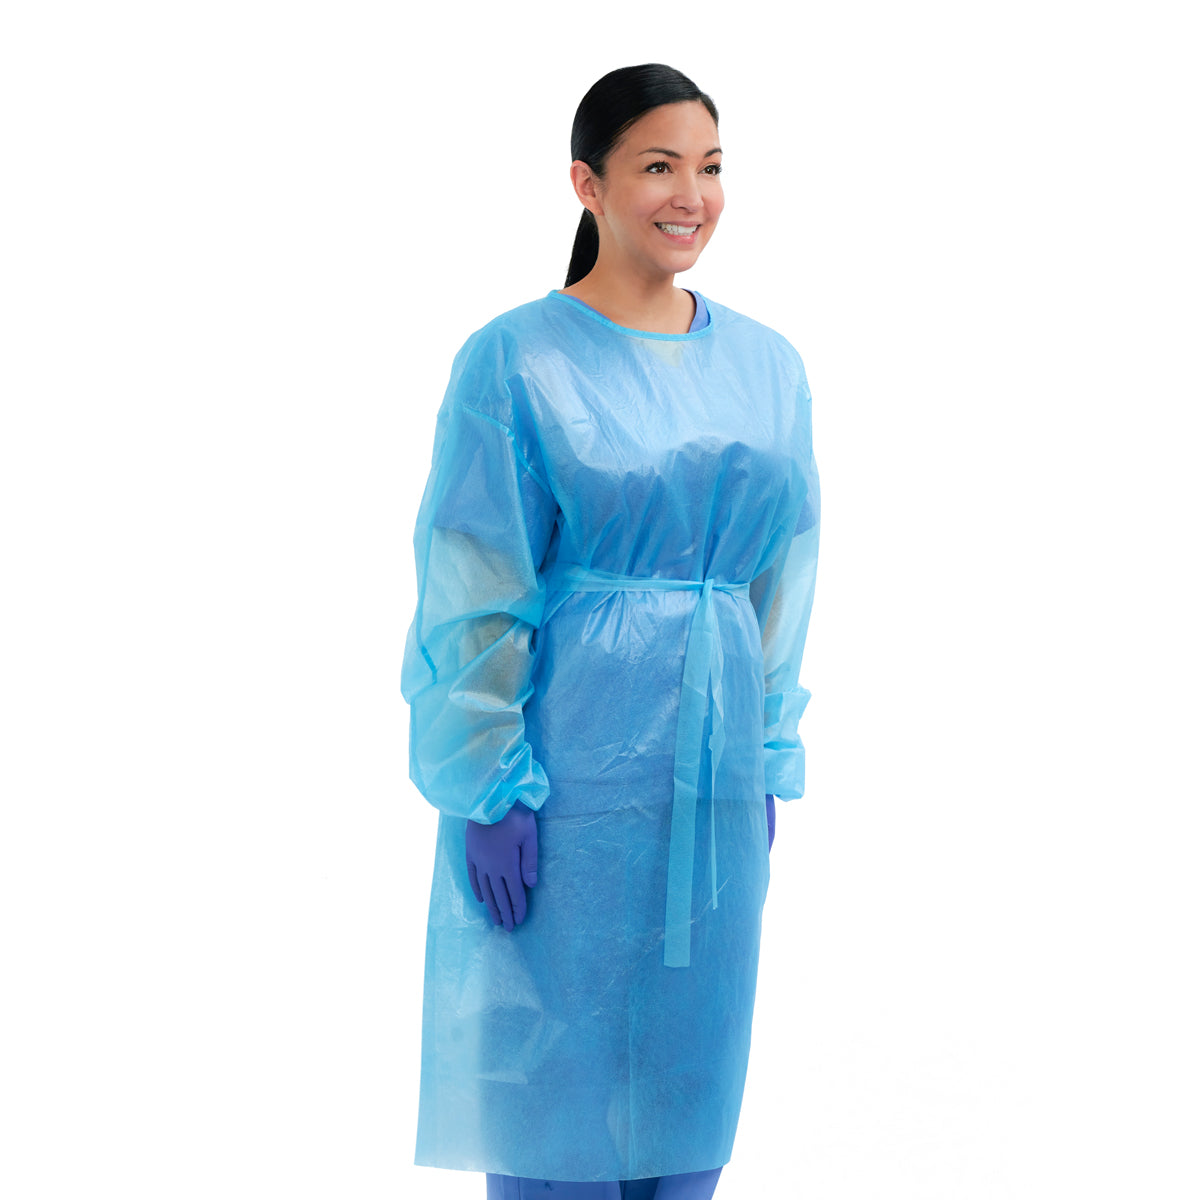 Disposable AAMI Level 1 Non-Sterile Gown - Blue, 50/PK